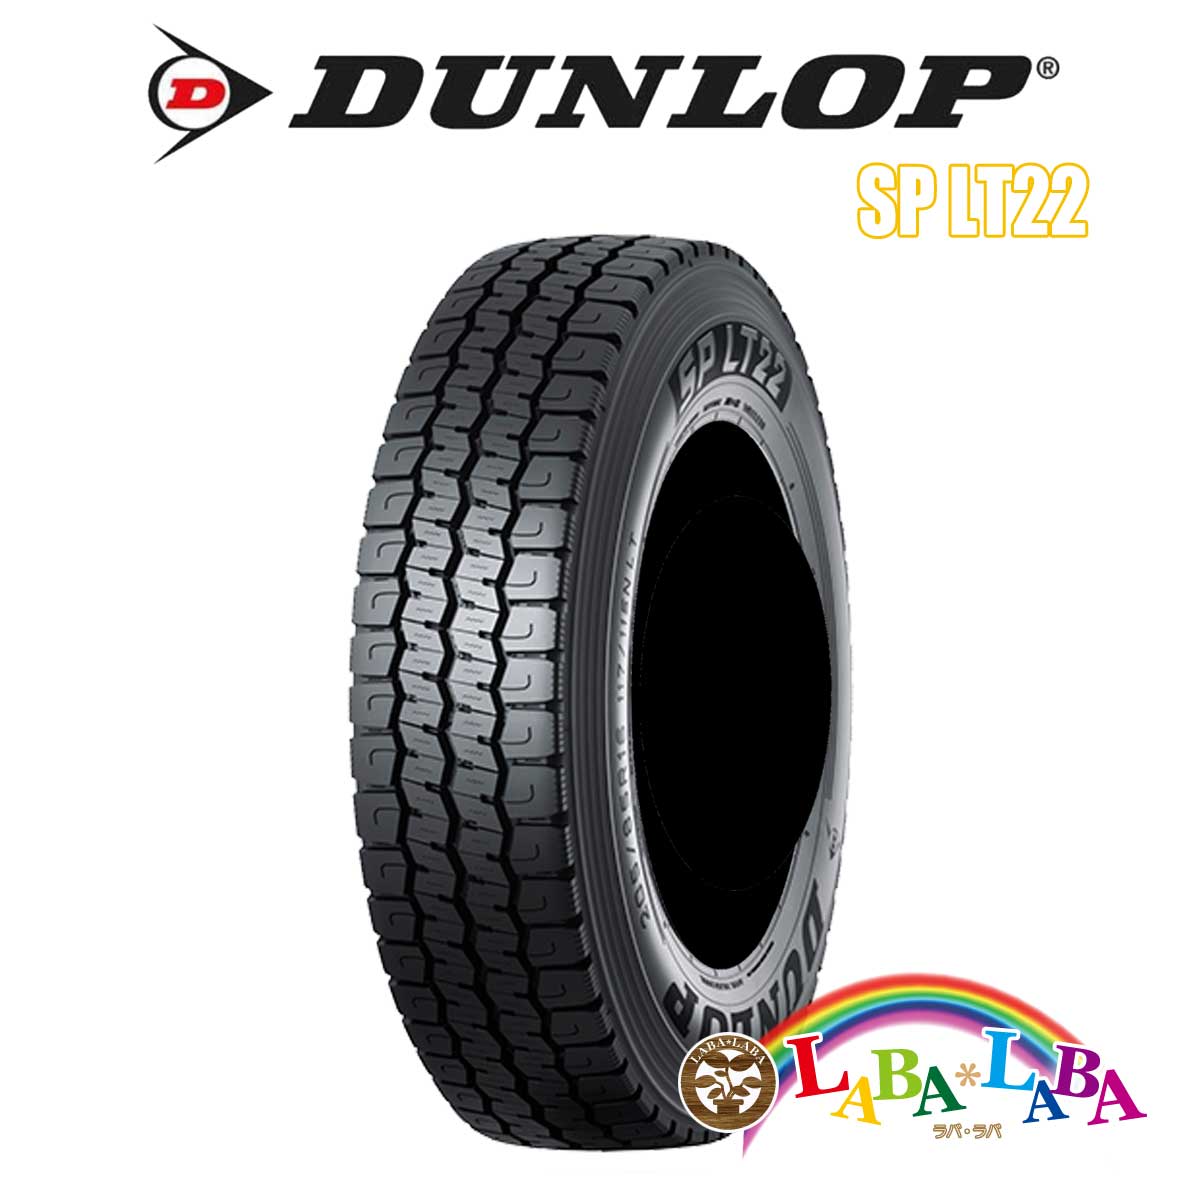 DUNLOP SP LT22 205/70R16 111/109N サマータイヤ LT バン